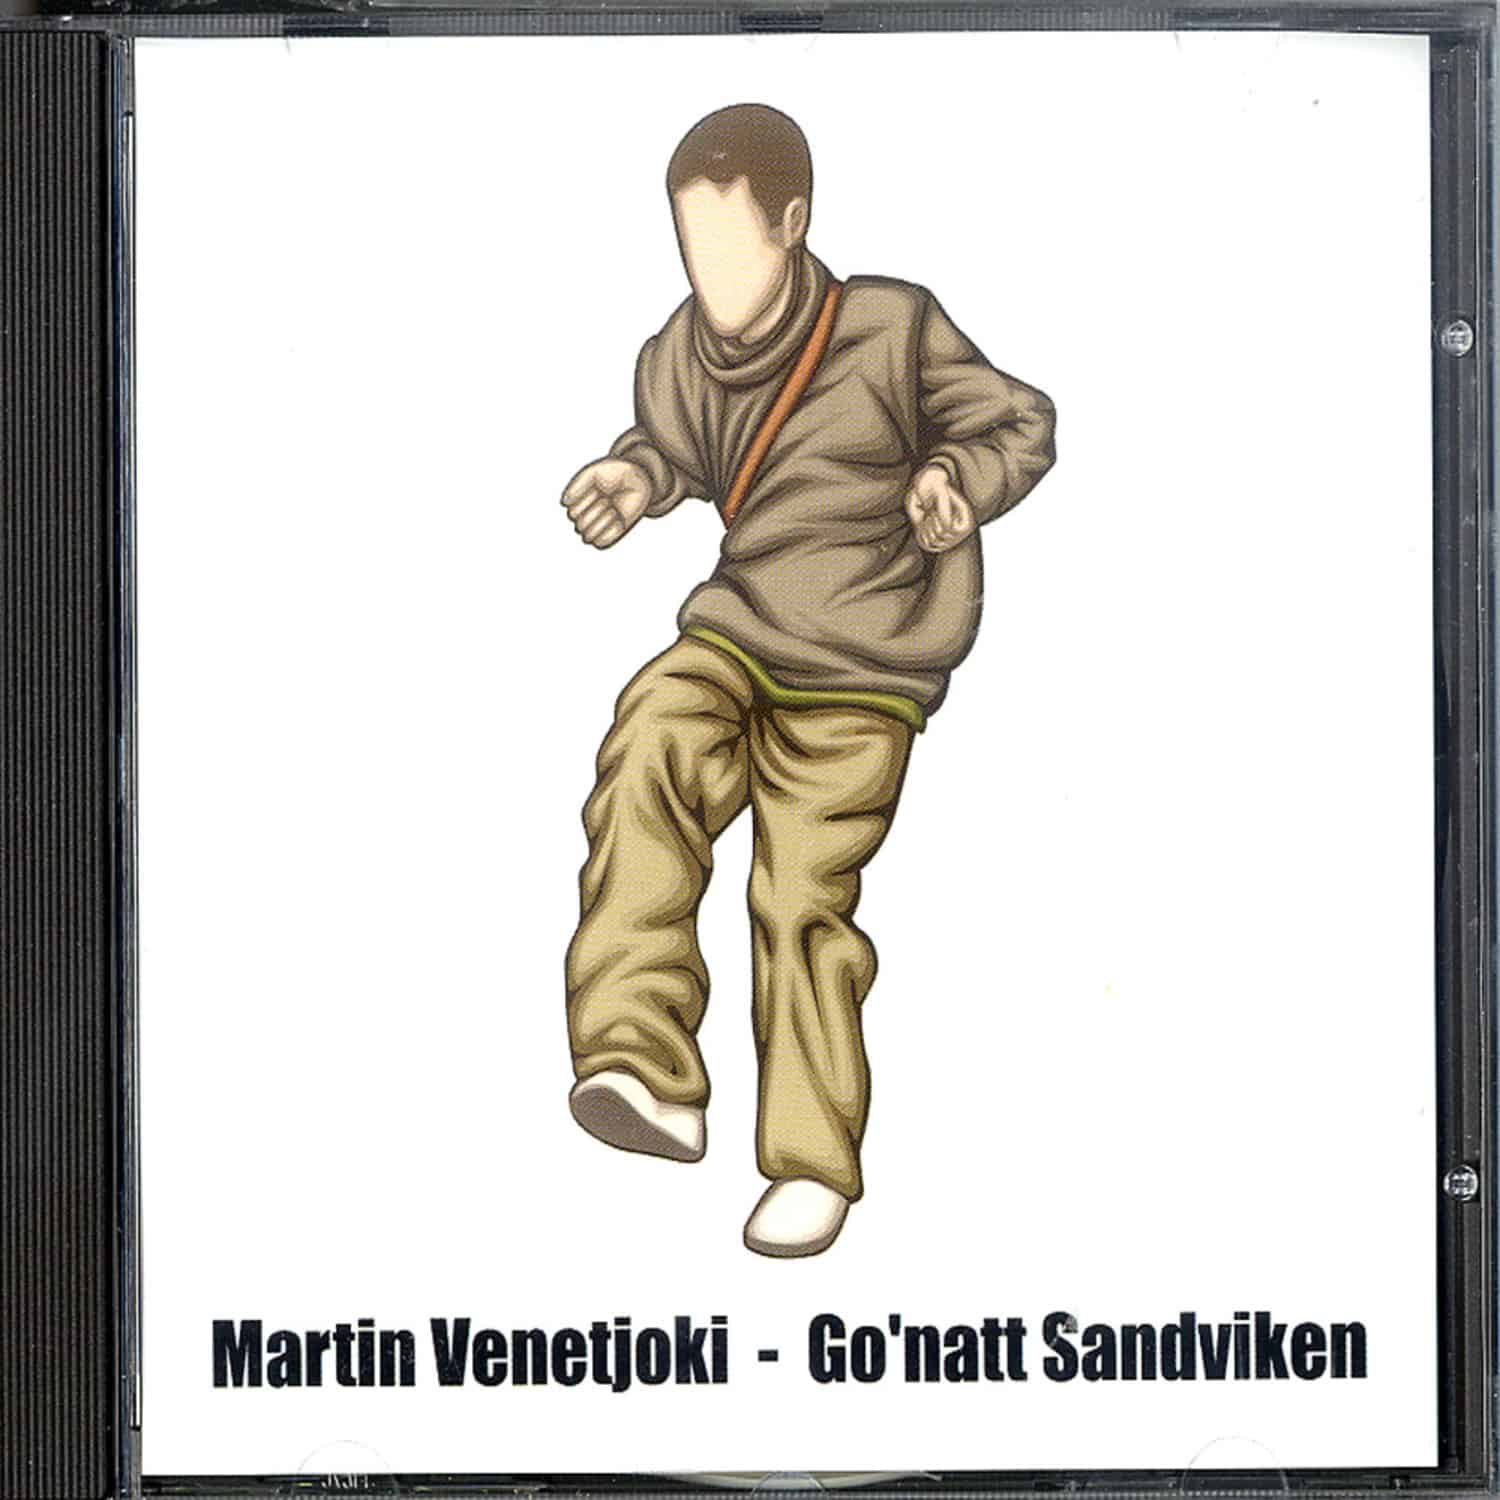 Martin Venetjoki - GO NATT SANDVIKEN 